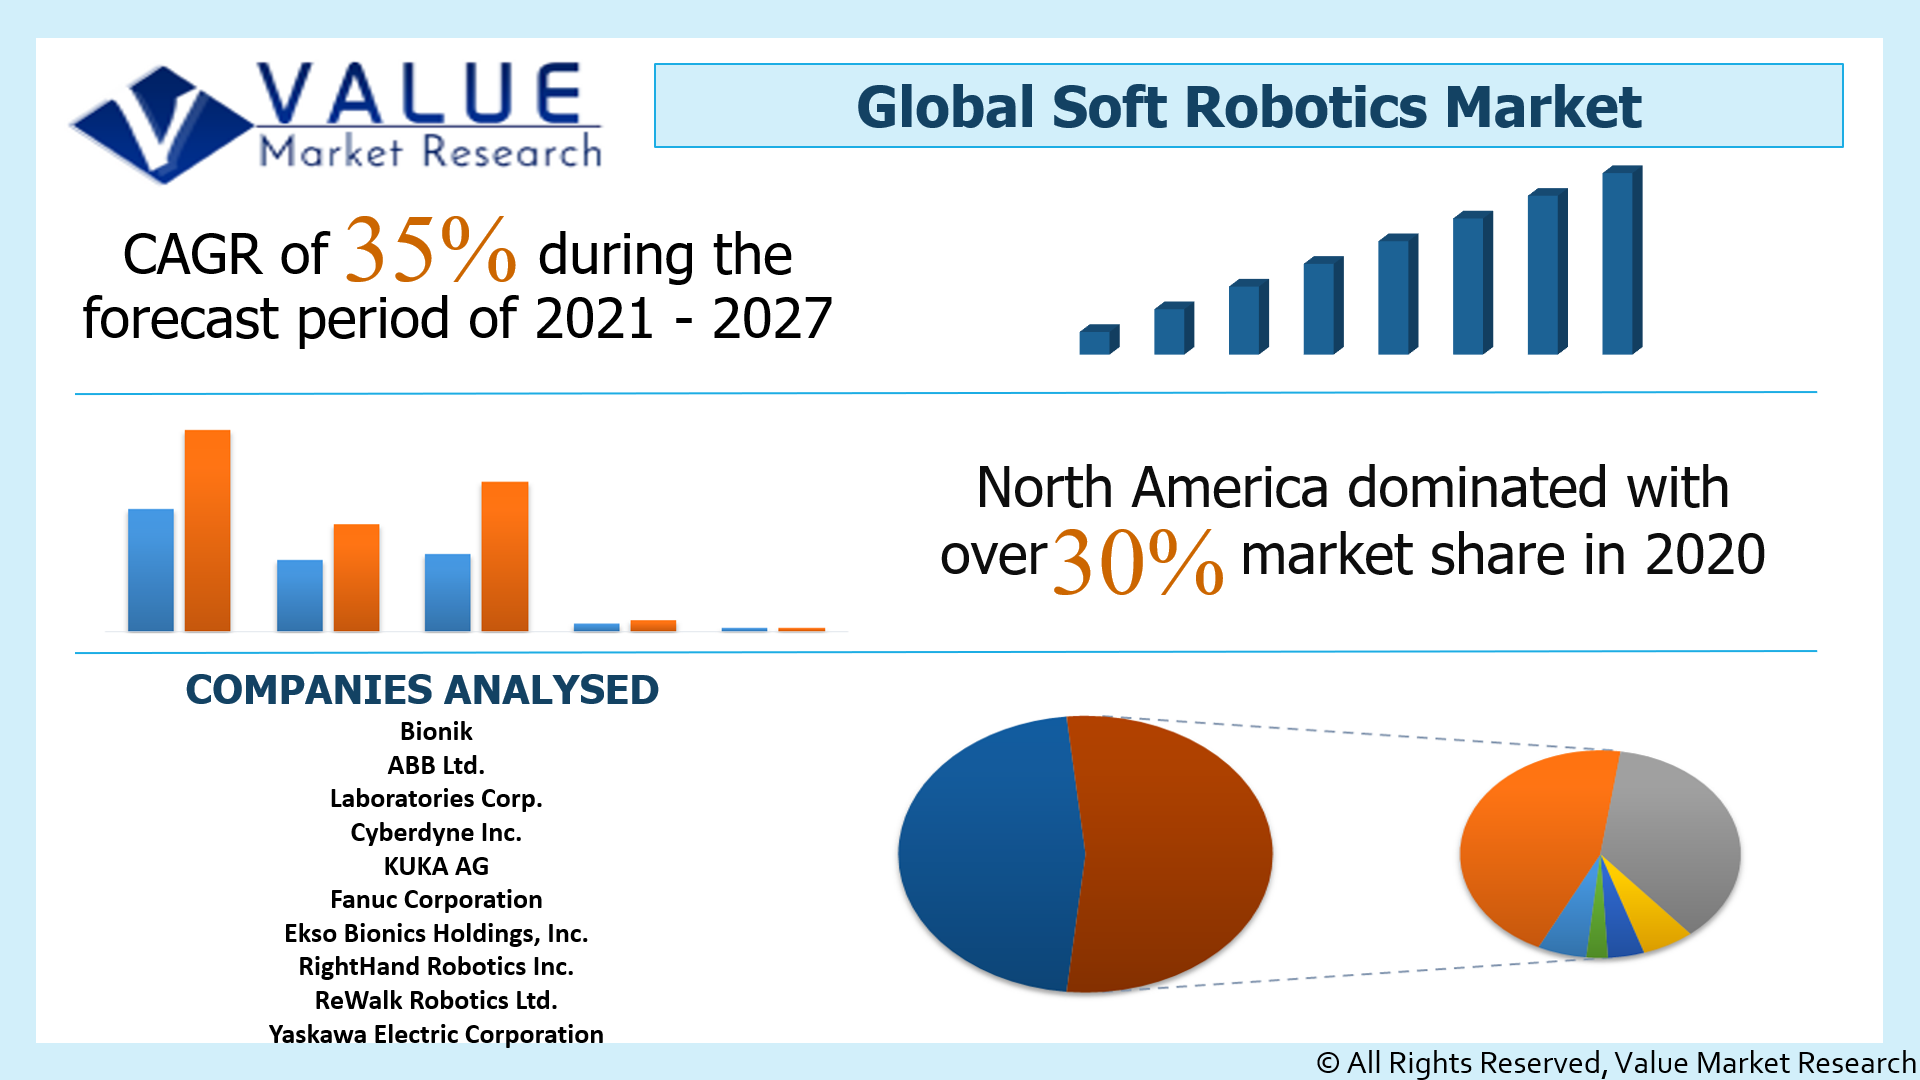 Global Soft Robotics Market Share